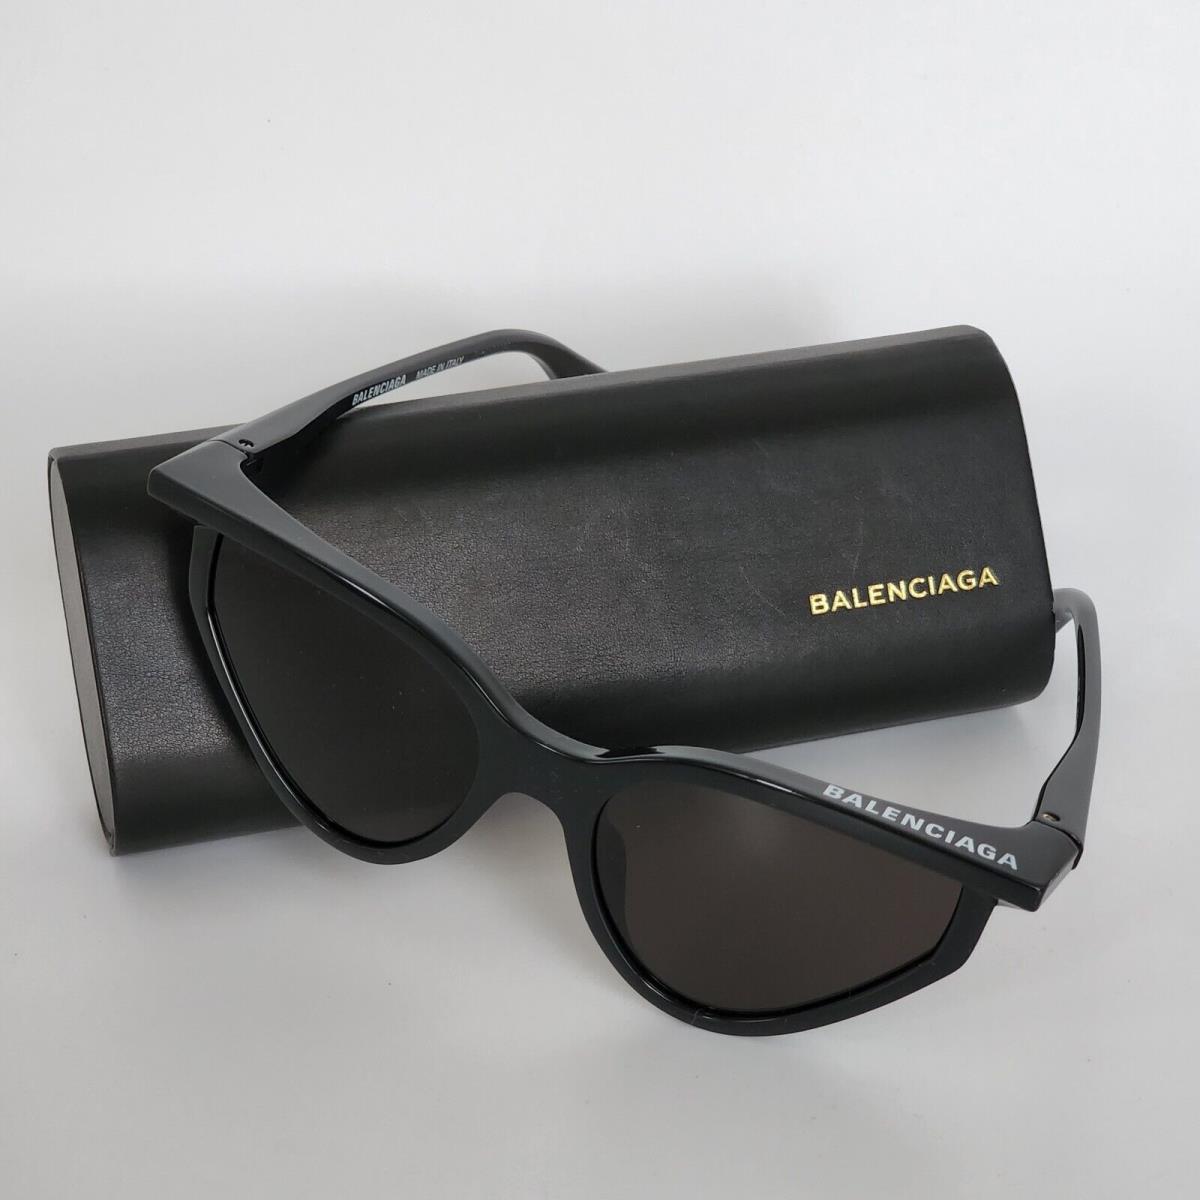 Balenciaga sunglasses  - Black Frame, Gray Lens 1